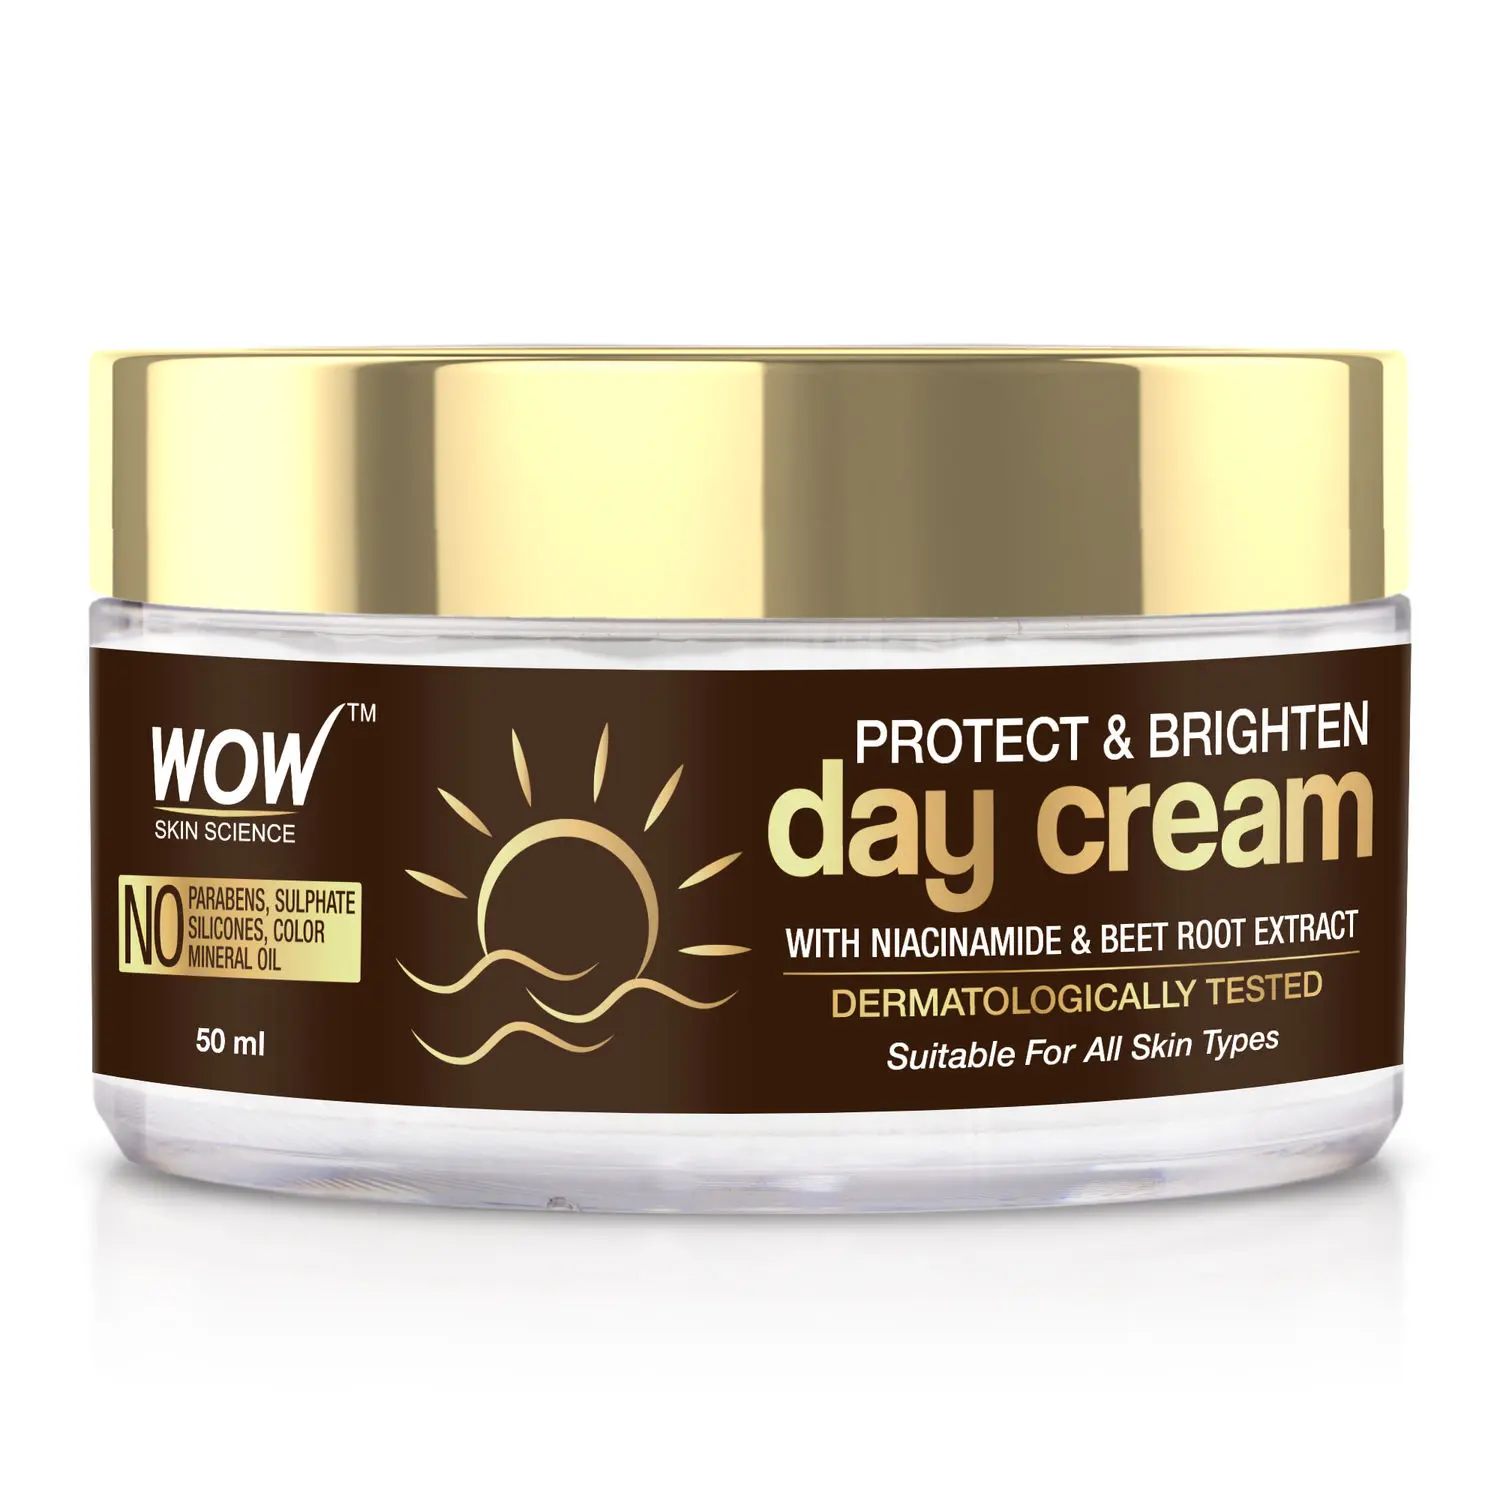 WOW Skin Science Protect & Brighten Day Cream | Brightens Complexion | Prevents Skin Damage | Hydrates & Nourishes Skin 50ml